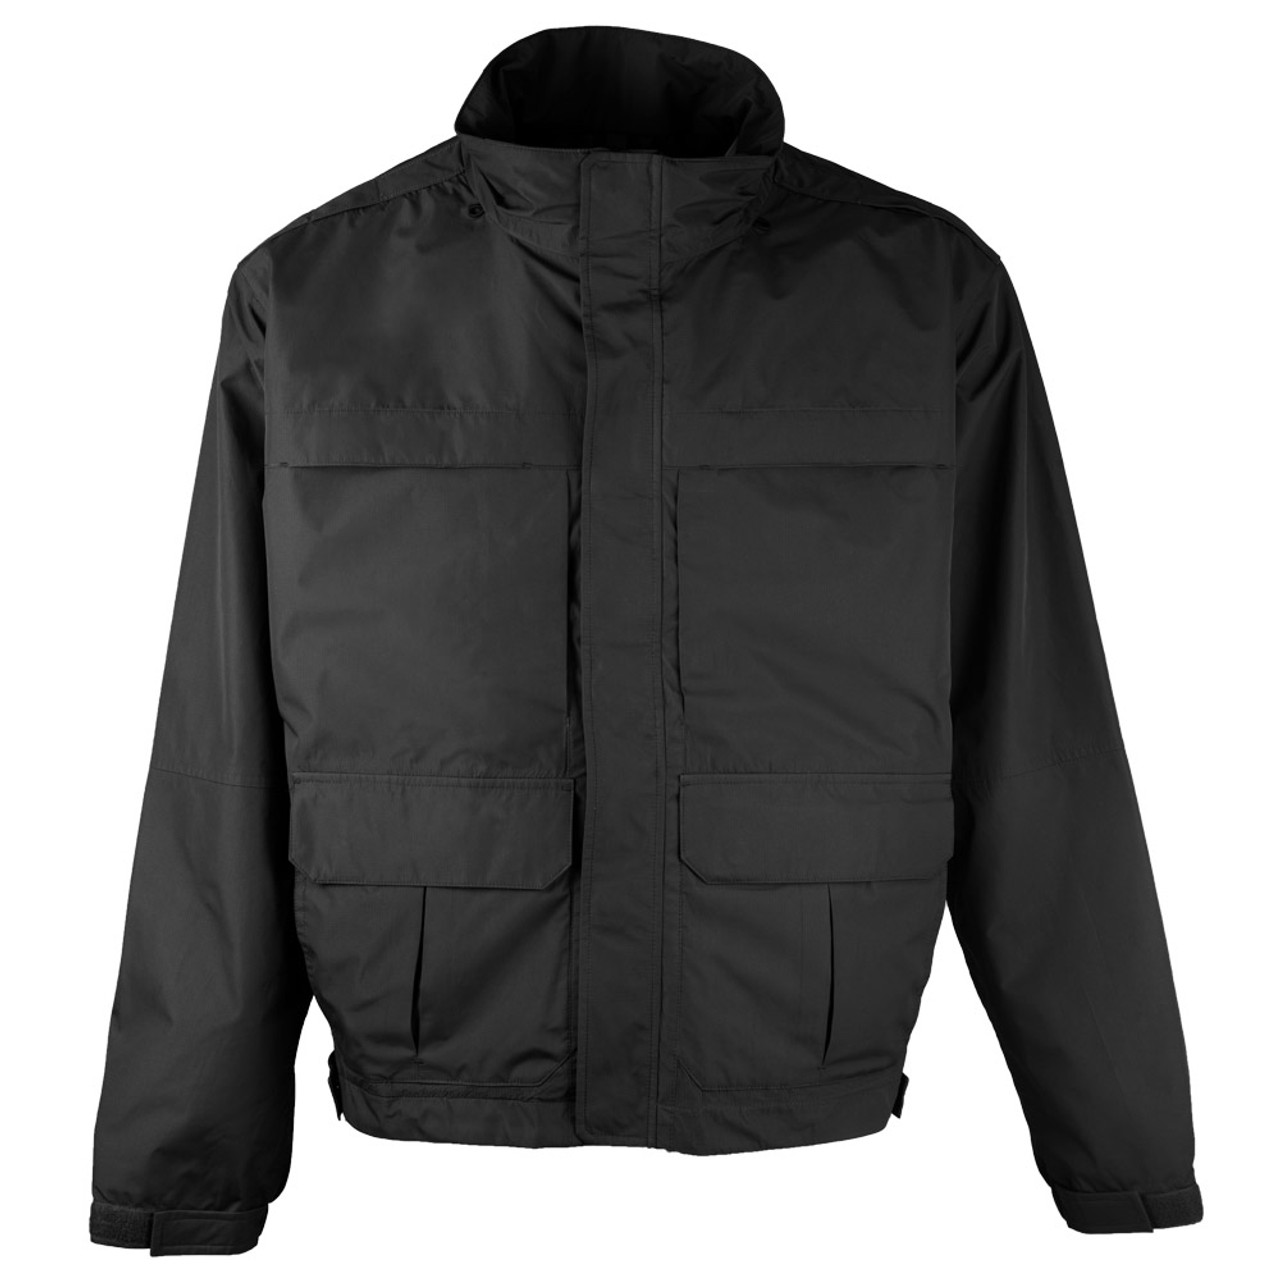 Tact Squad UM5357 Black Versa Duty Jacket, 3-in-1: shell/fleece-lined, wind/waterproof, insulated